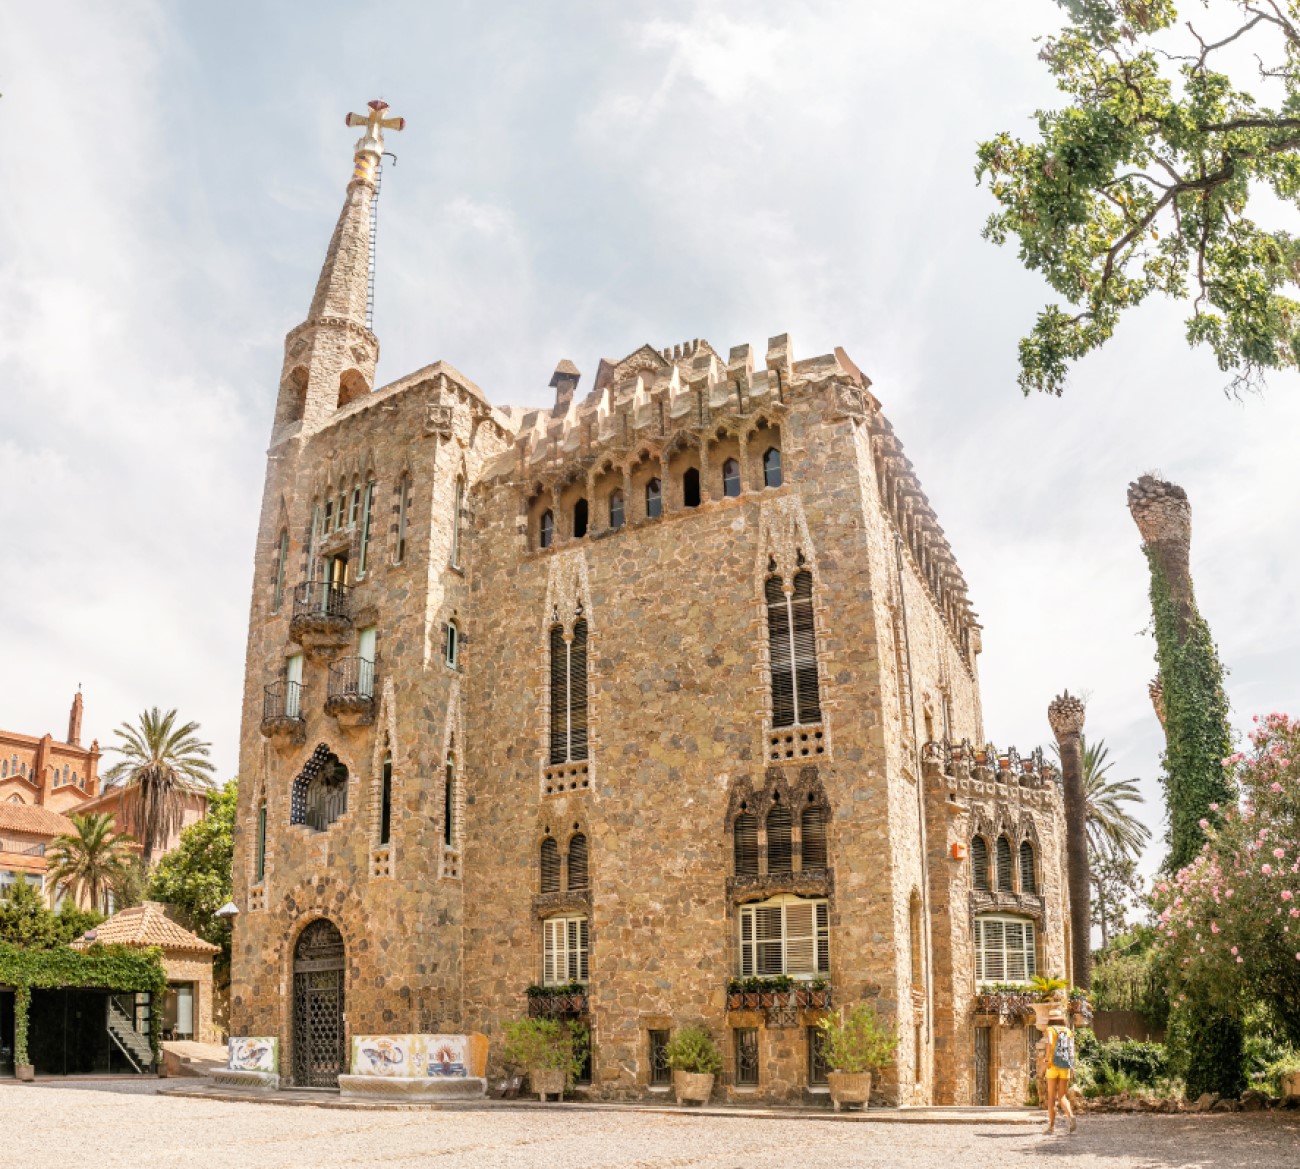 Bellesguard tower building designed by Antoni Gaudi in Barcelona, Spain